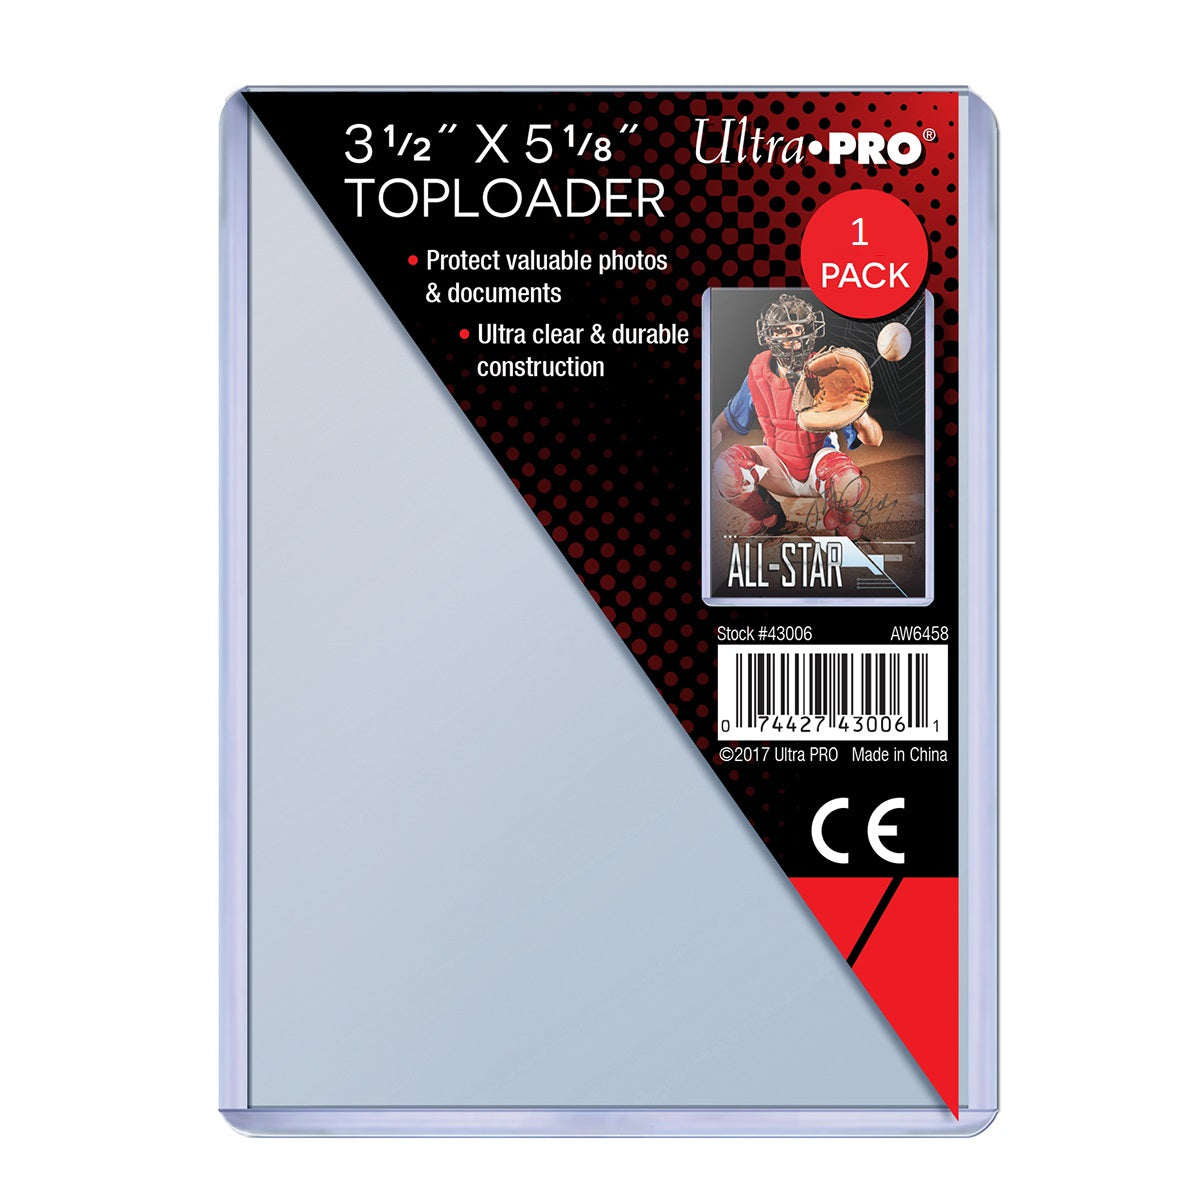 Ultra PRO Toploader 3 1/2&#39; X 5 1/8&#39; (Transformer Card Game Large Card)